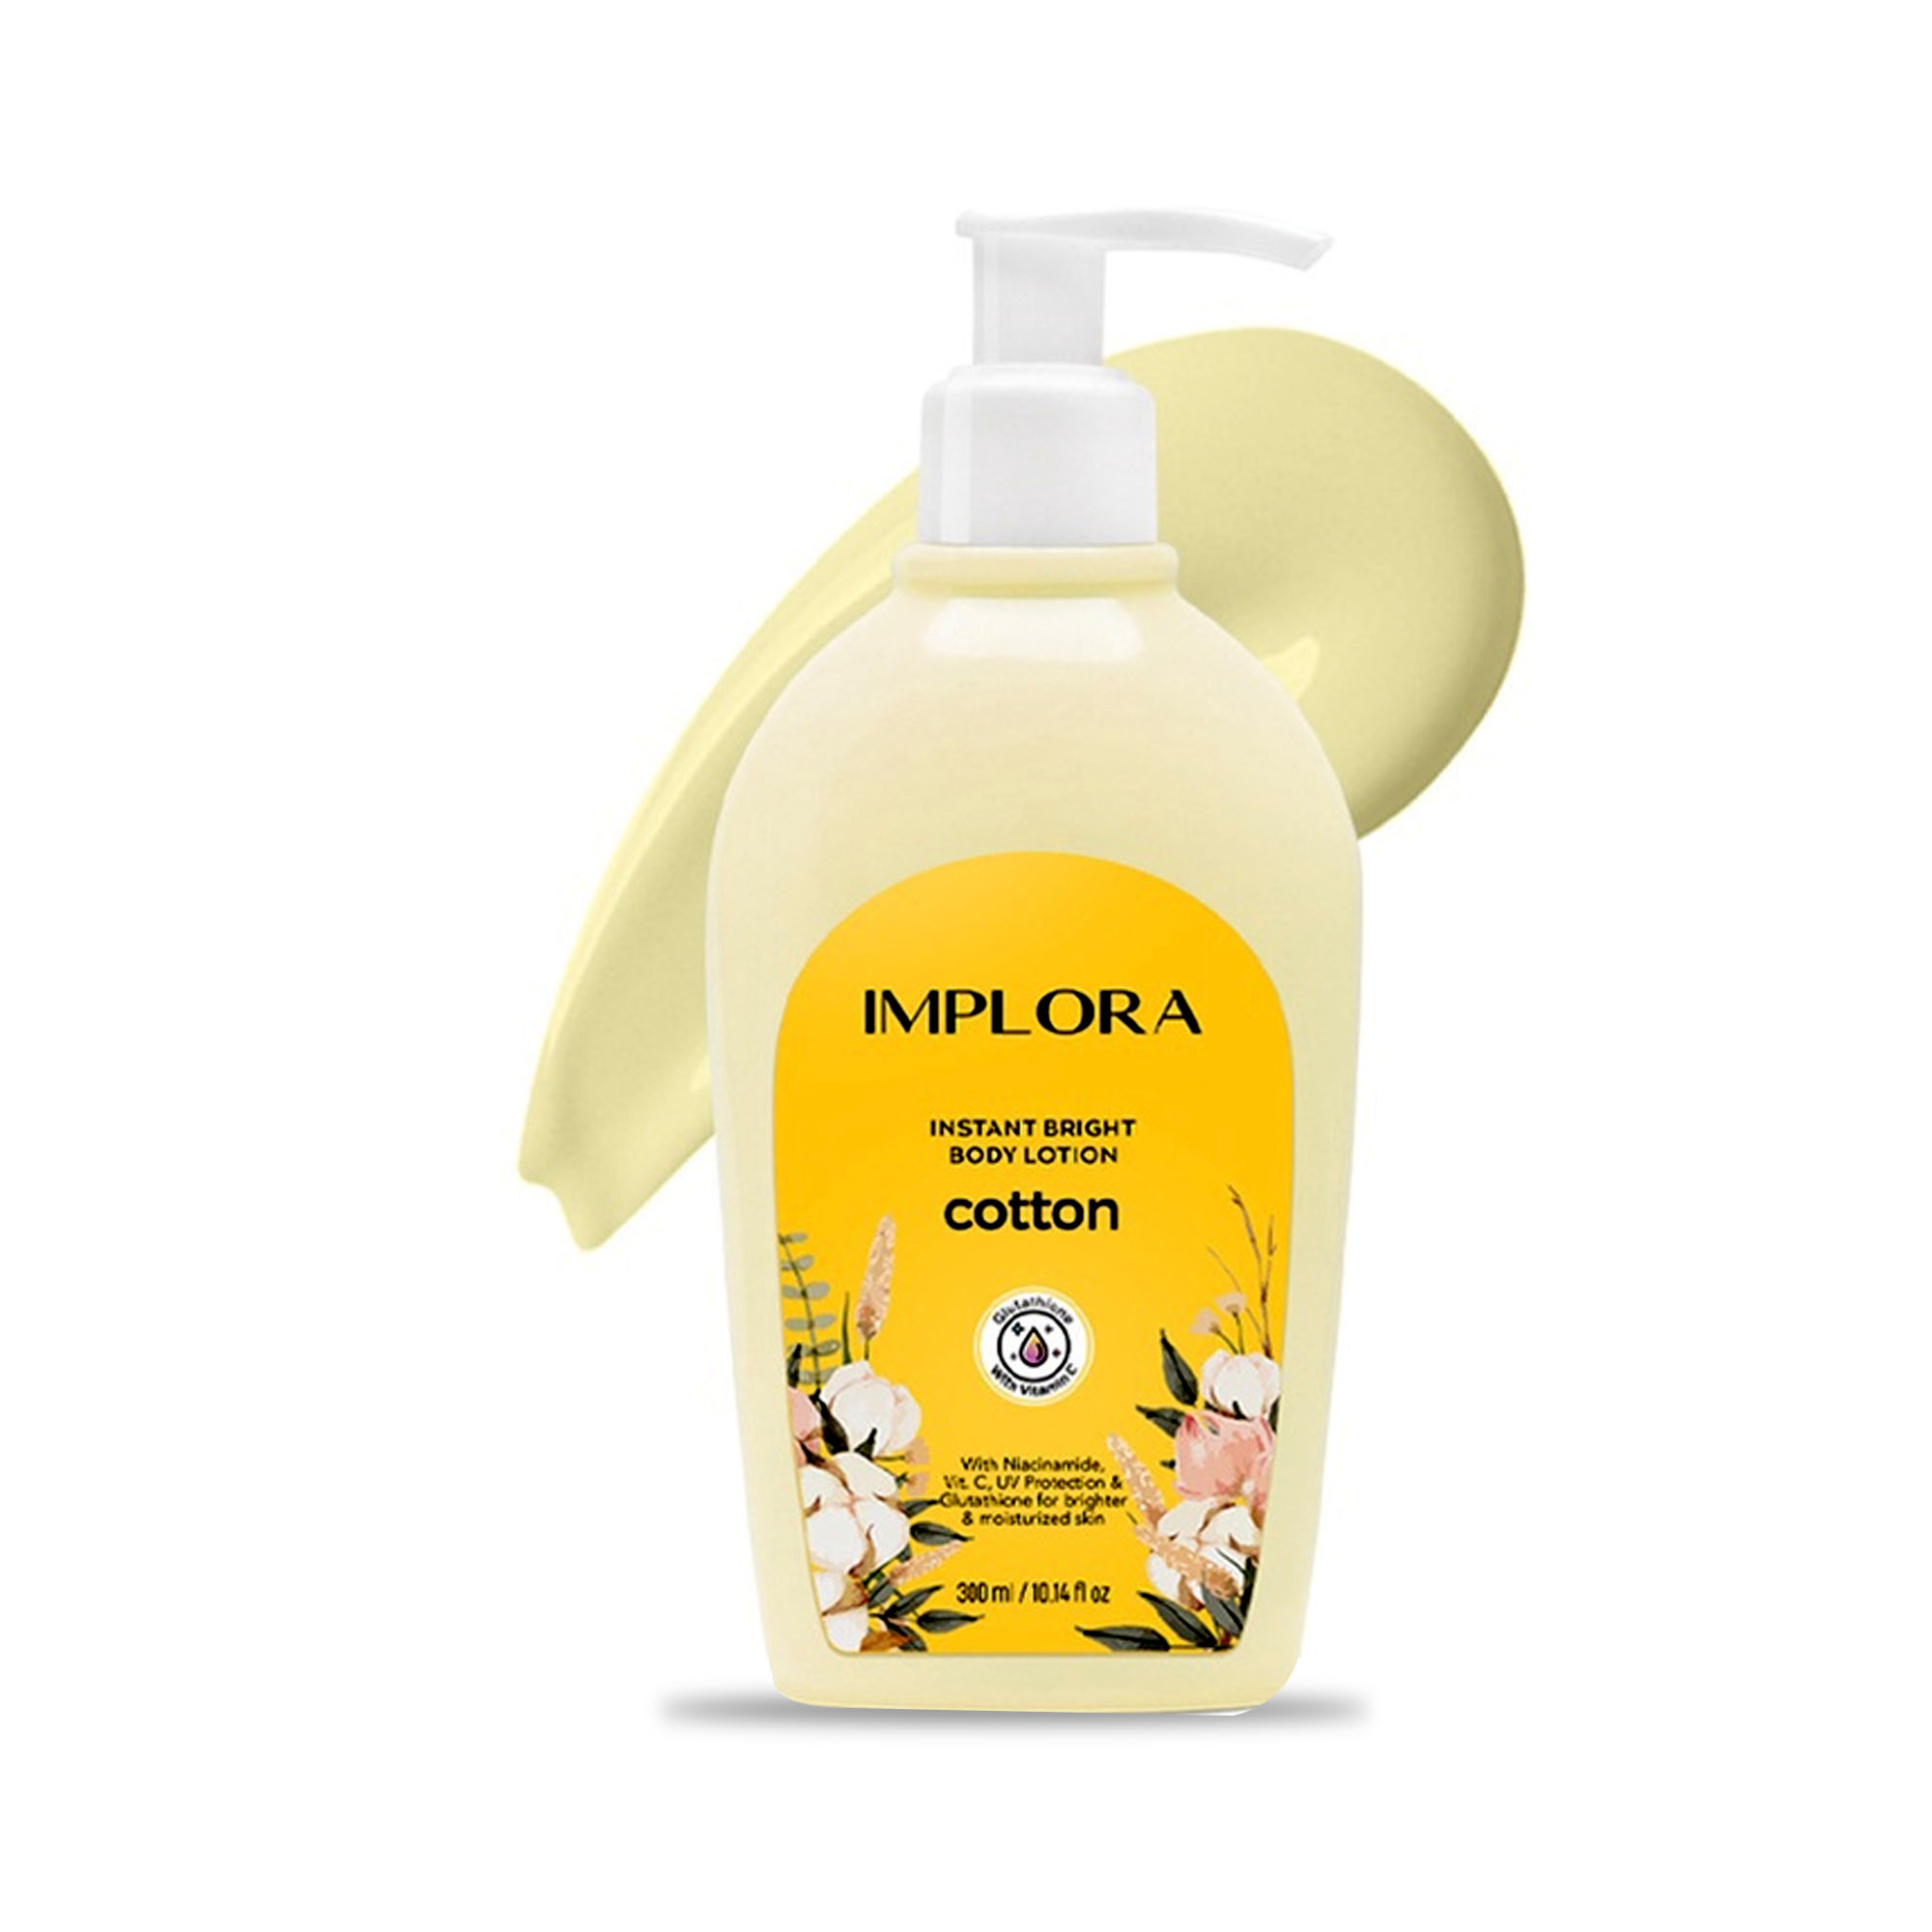 Implora Instan Bright Body Lotion Cotton 300 ml - Aroma Vanilla